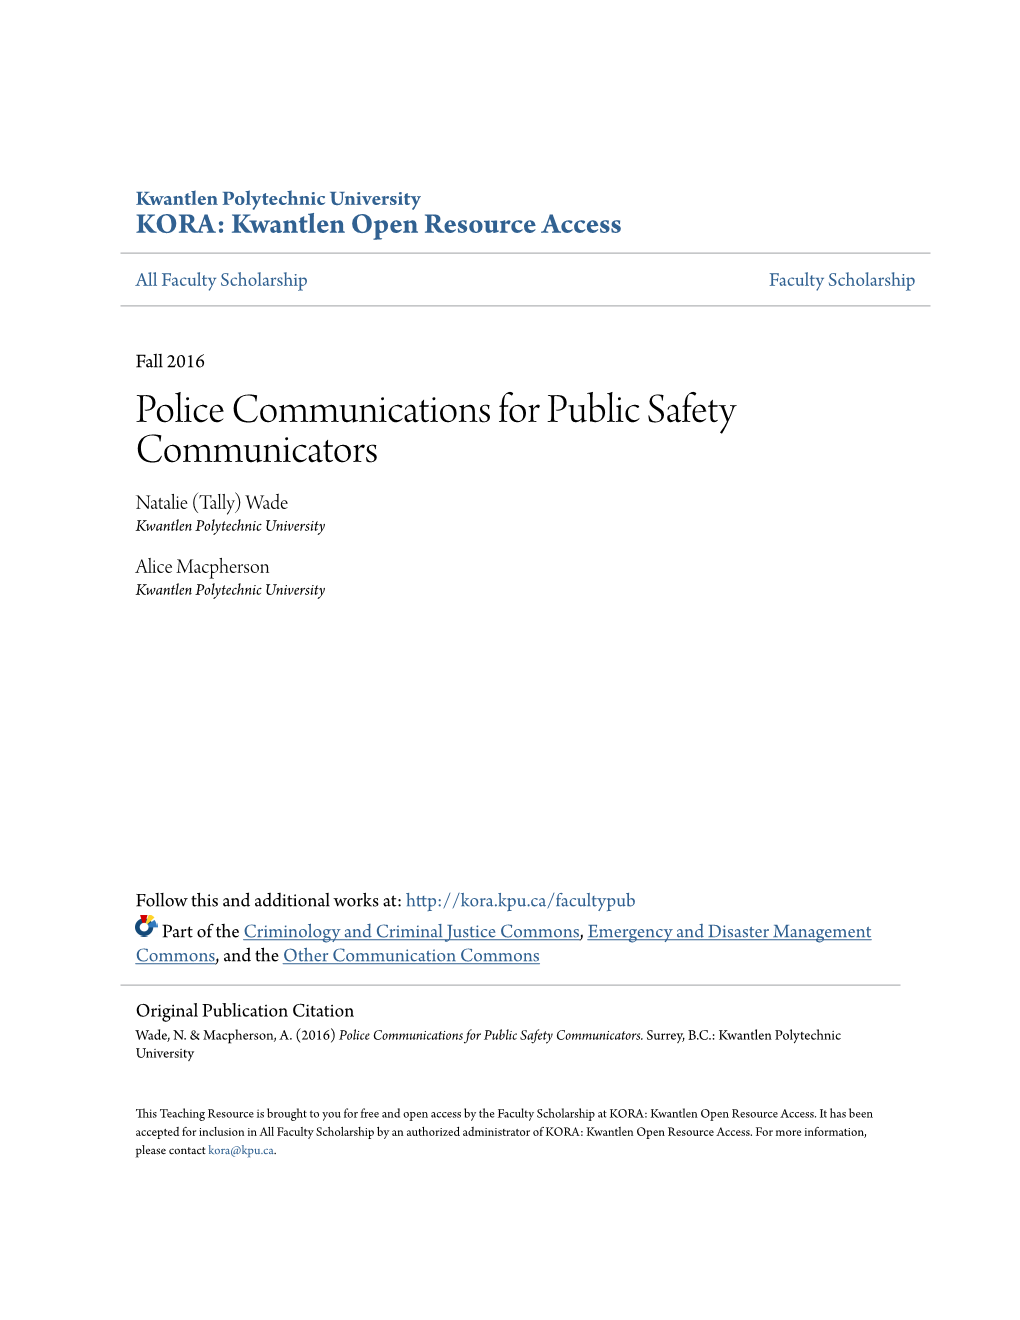 Police Communications for Public Safety Communicators Natalie (Tally) Wade Kwantlen Polytechnic University